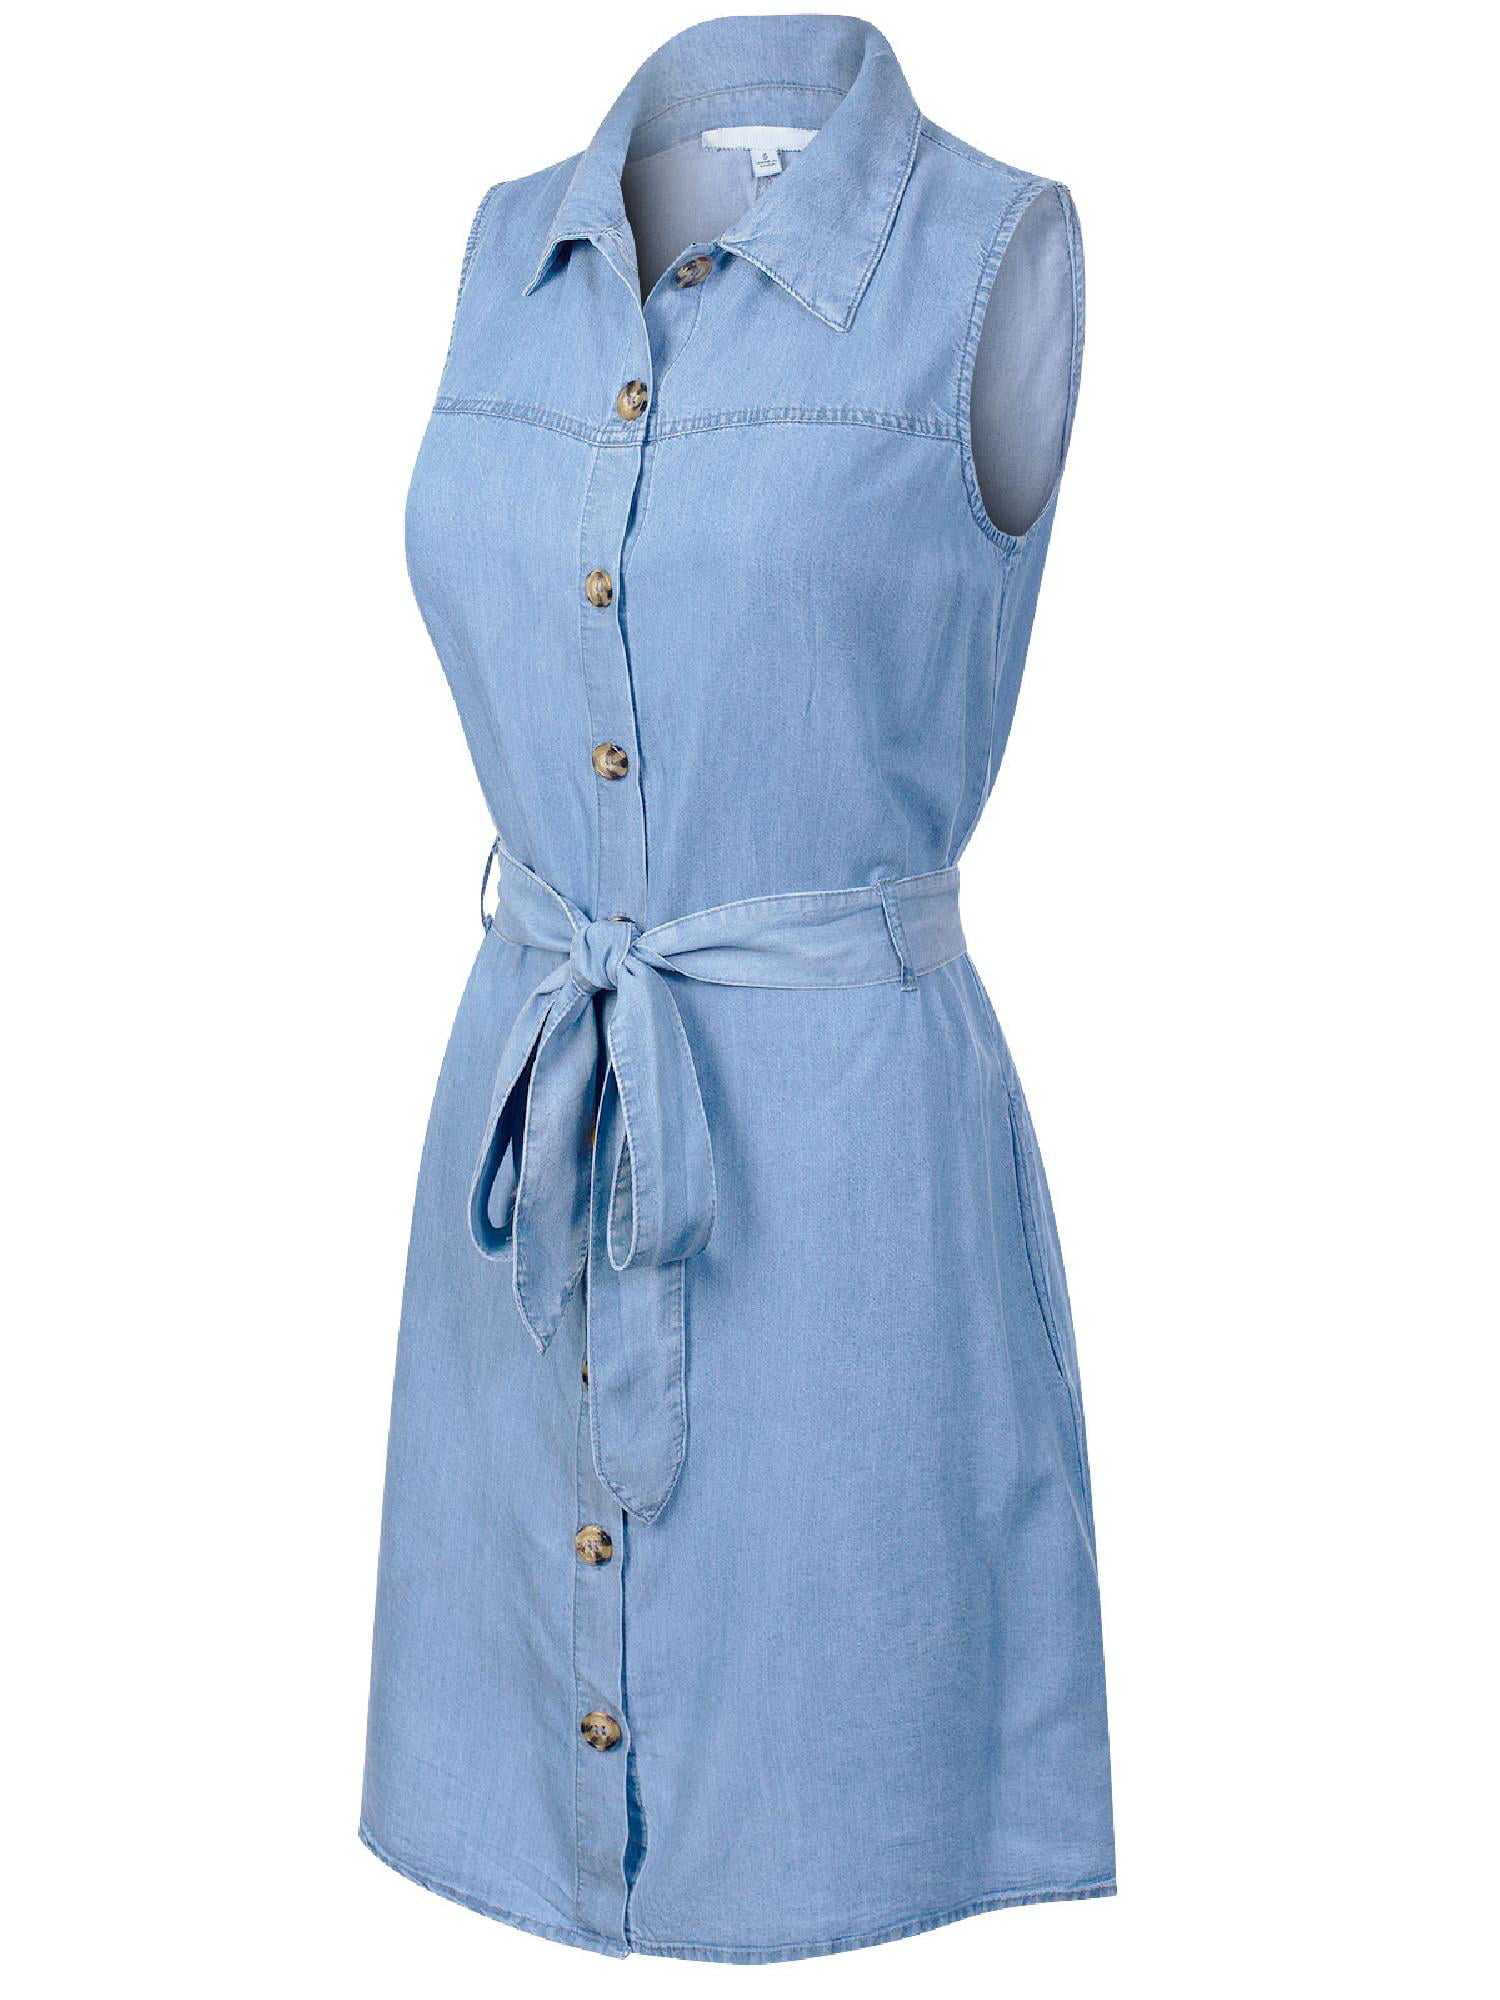 sleeveless button front shirtwaist with pockets light wash vintage denim shirt dress Eddie Bauer tag size large